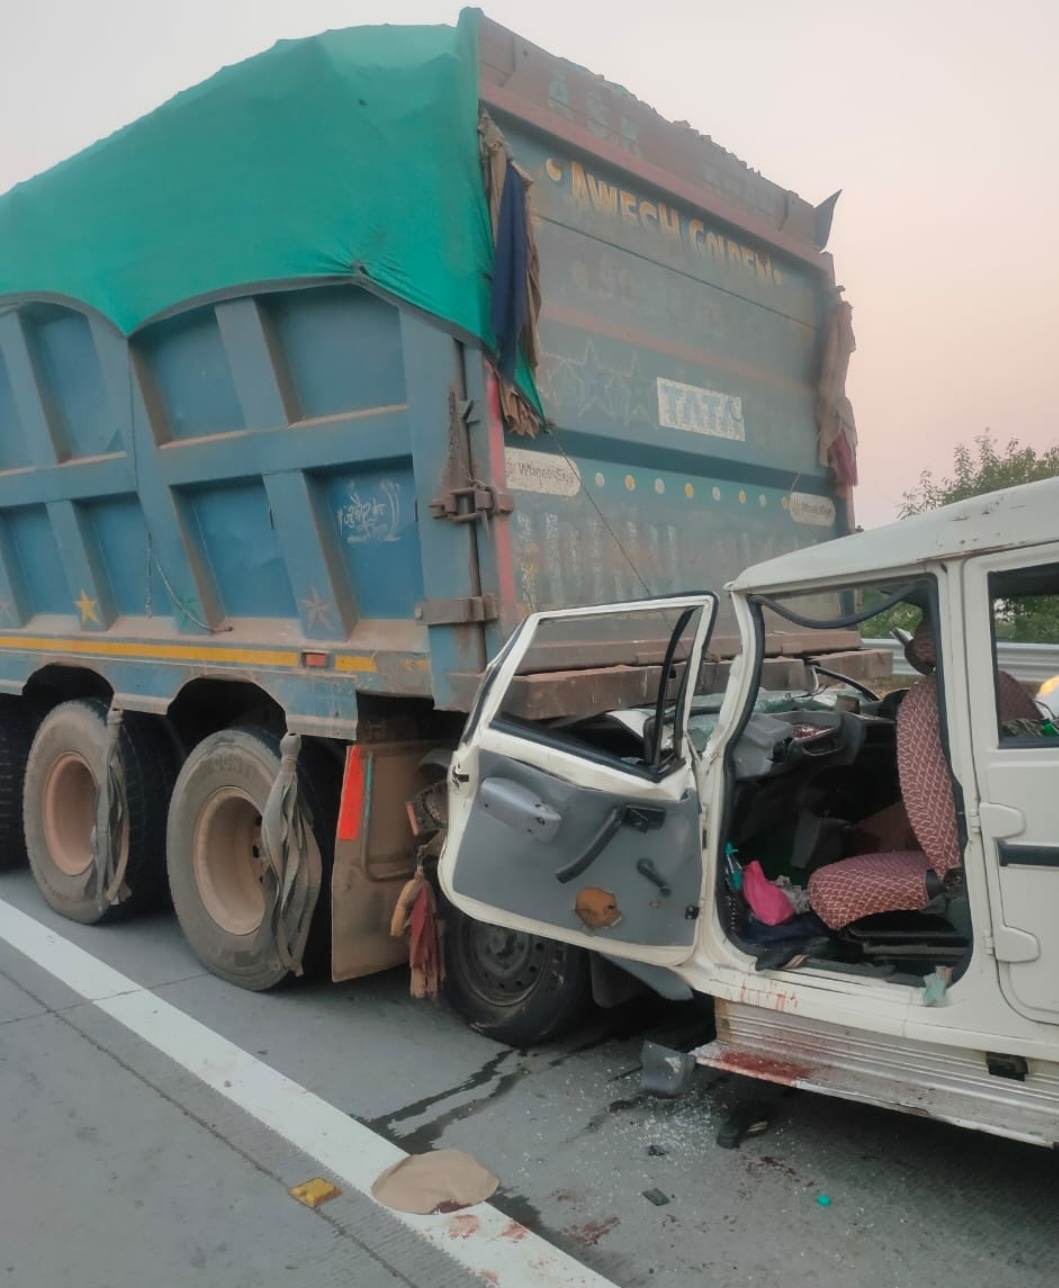 Road Accident in Maharashtra